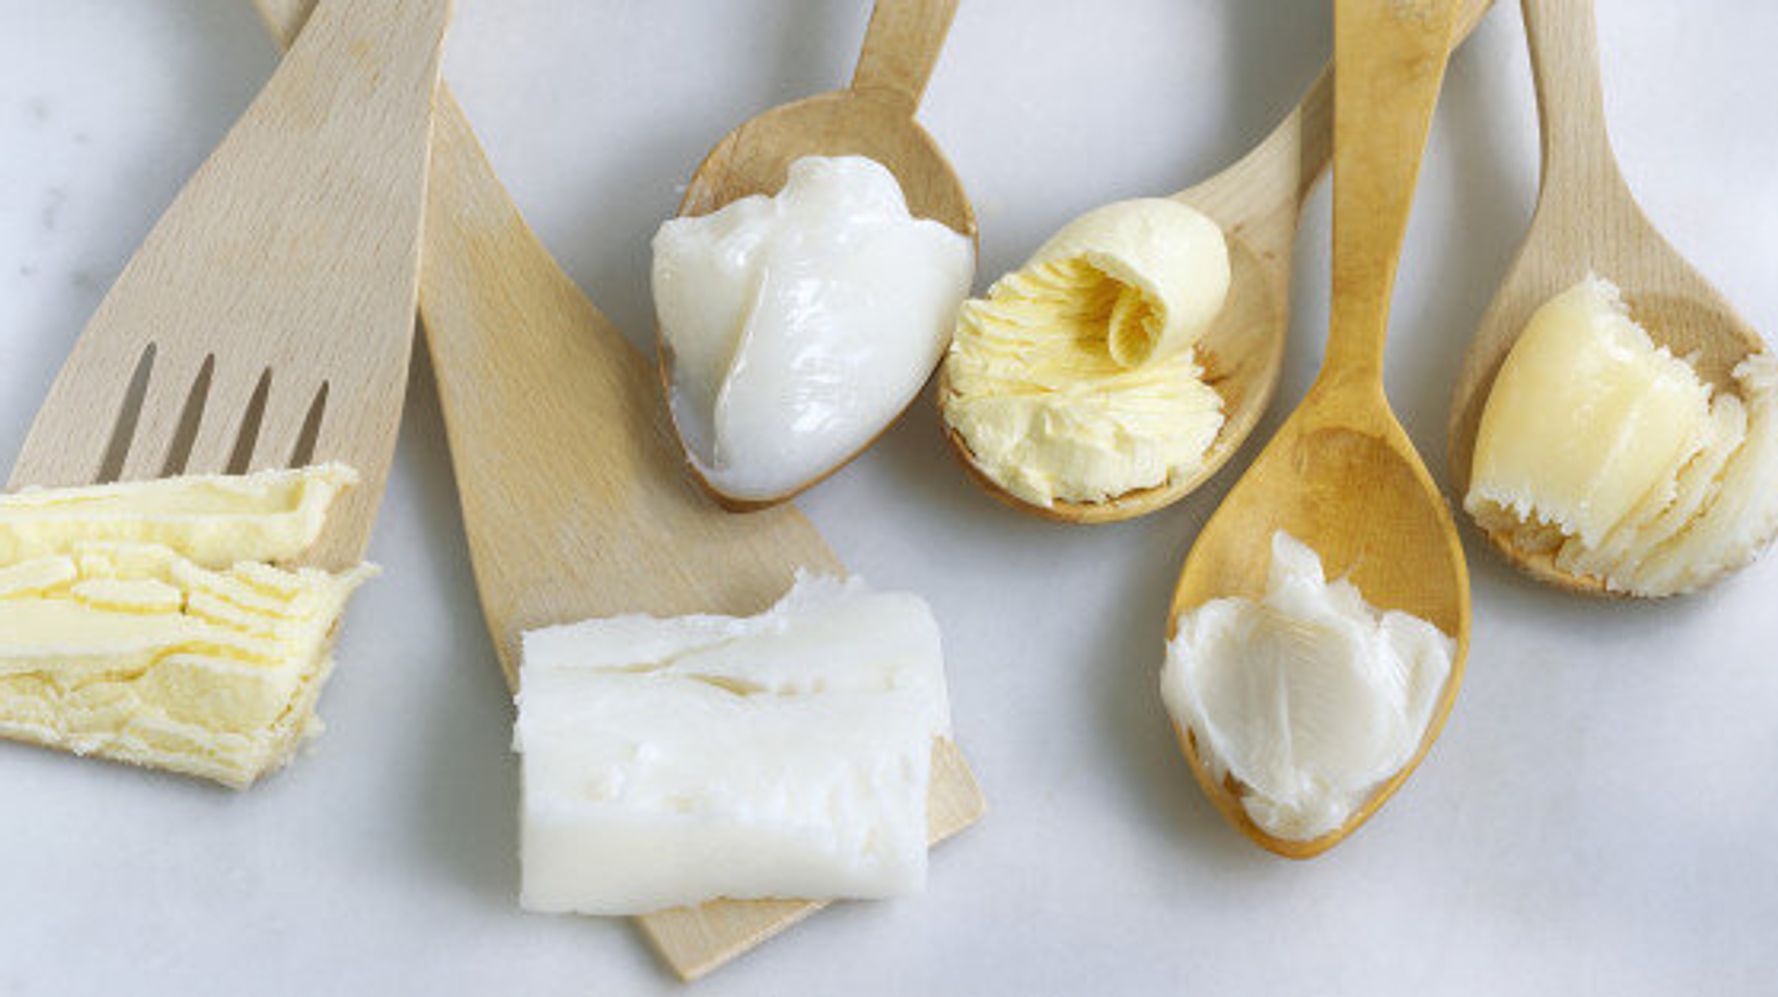 Butter vs Margarine - The Big Fat Debate